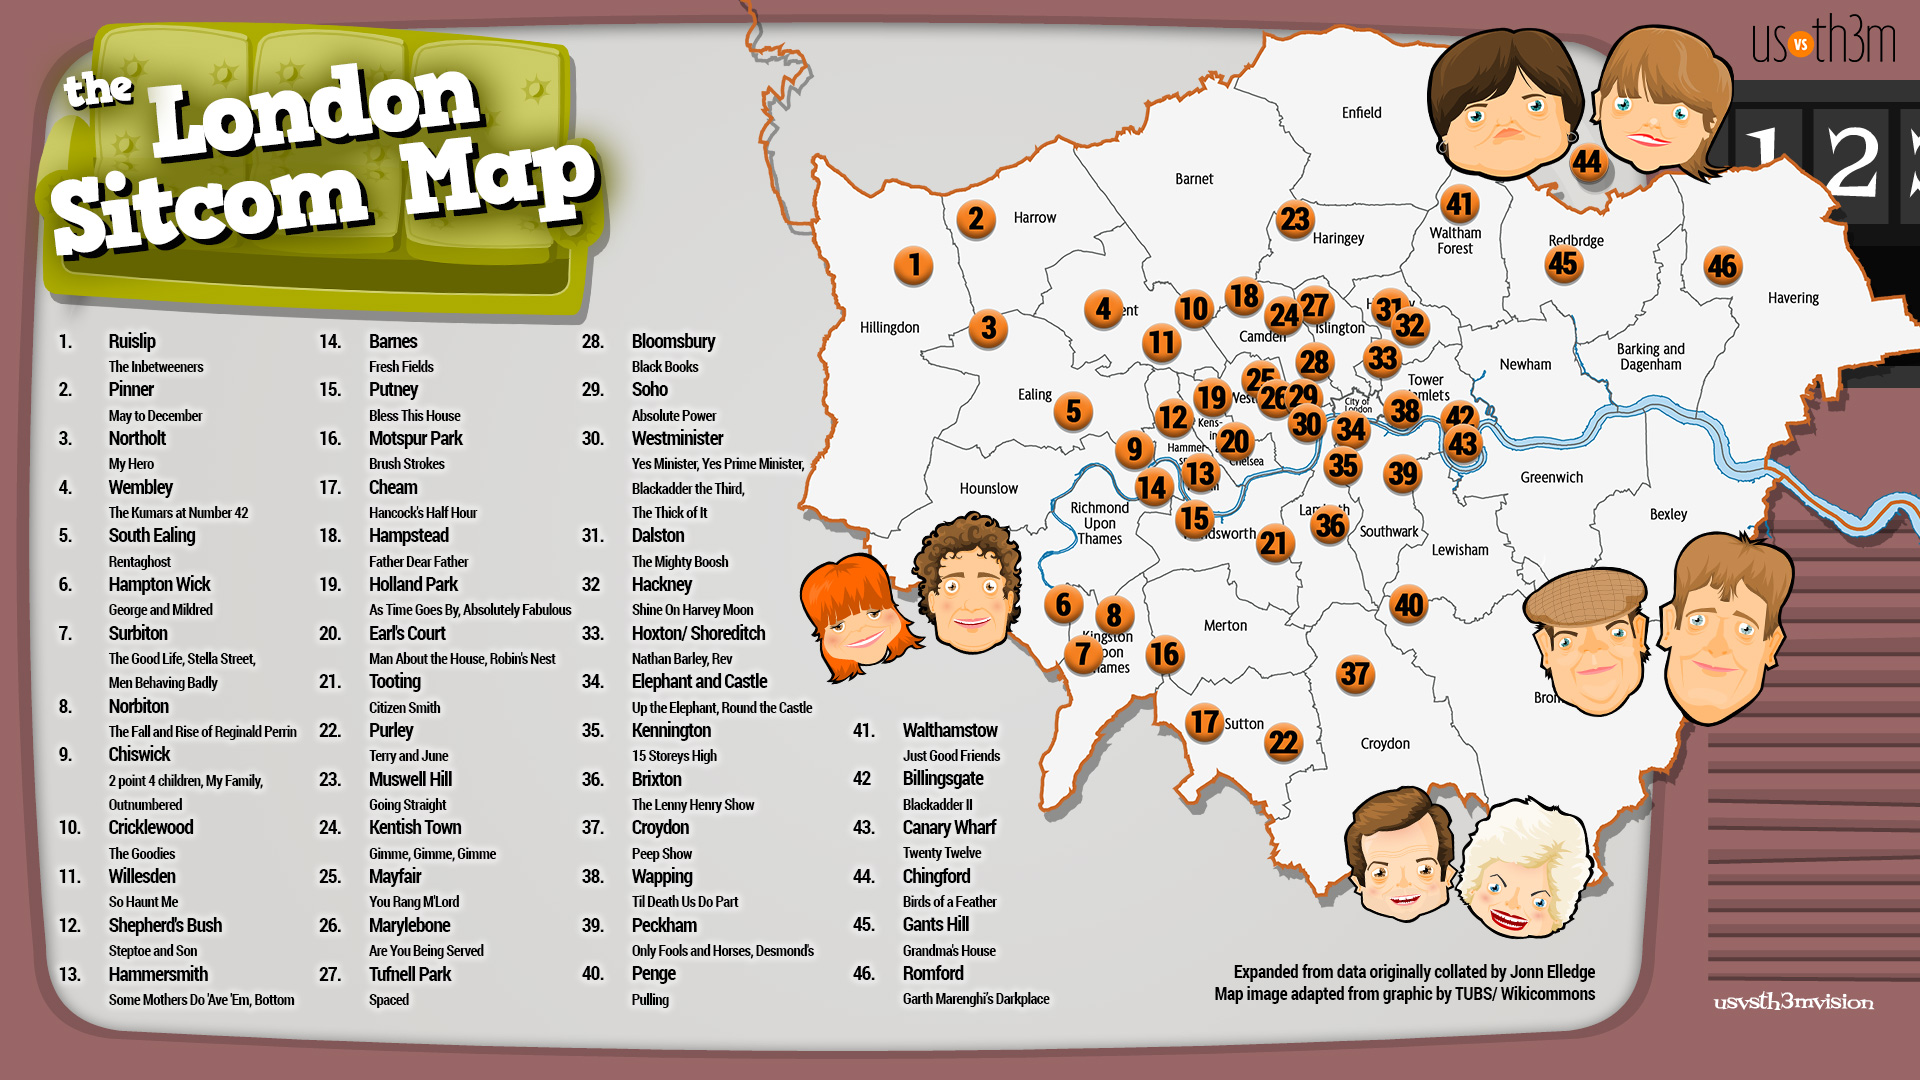 usvsth3m-london-sitcom-map-full-size3